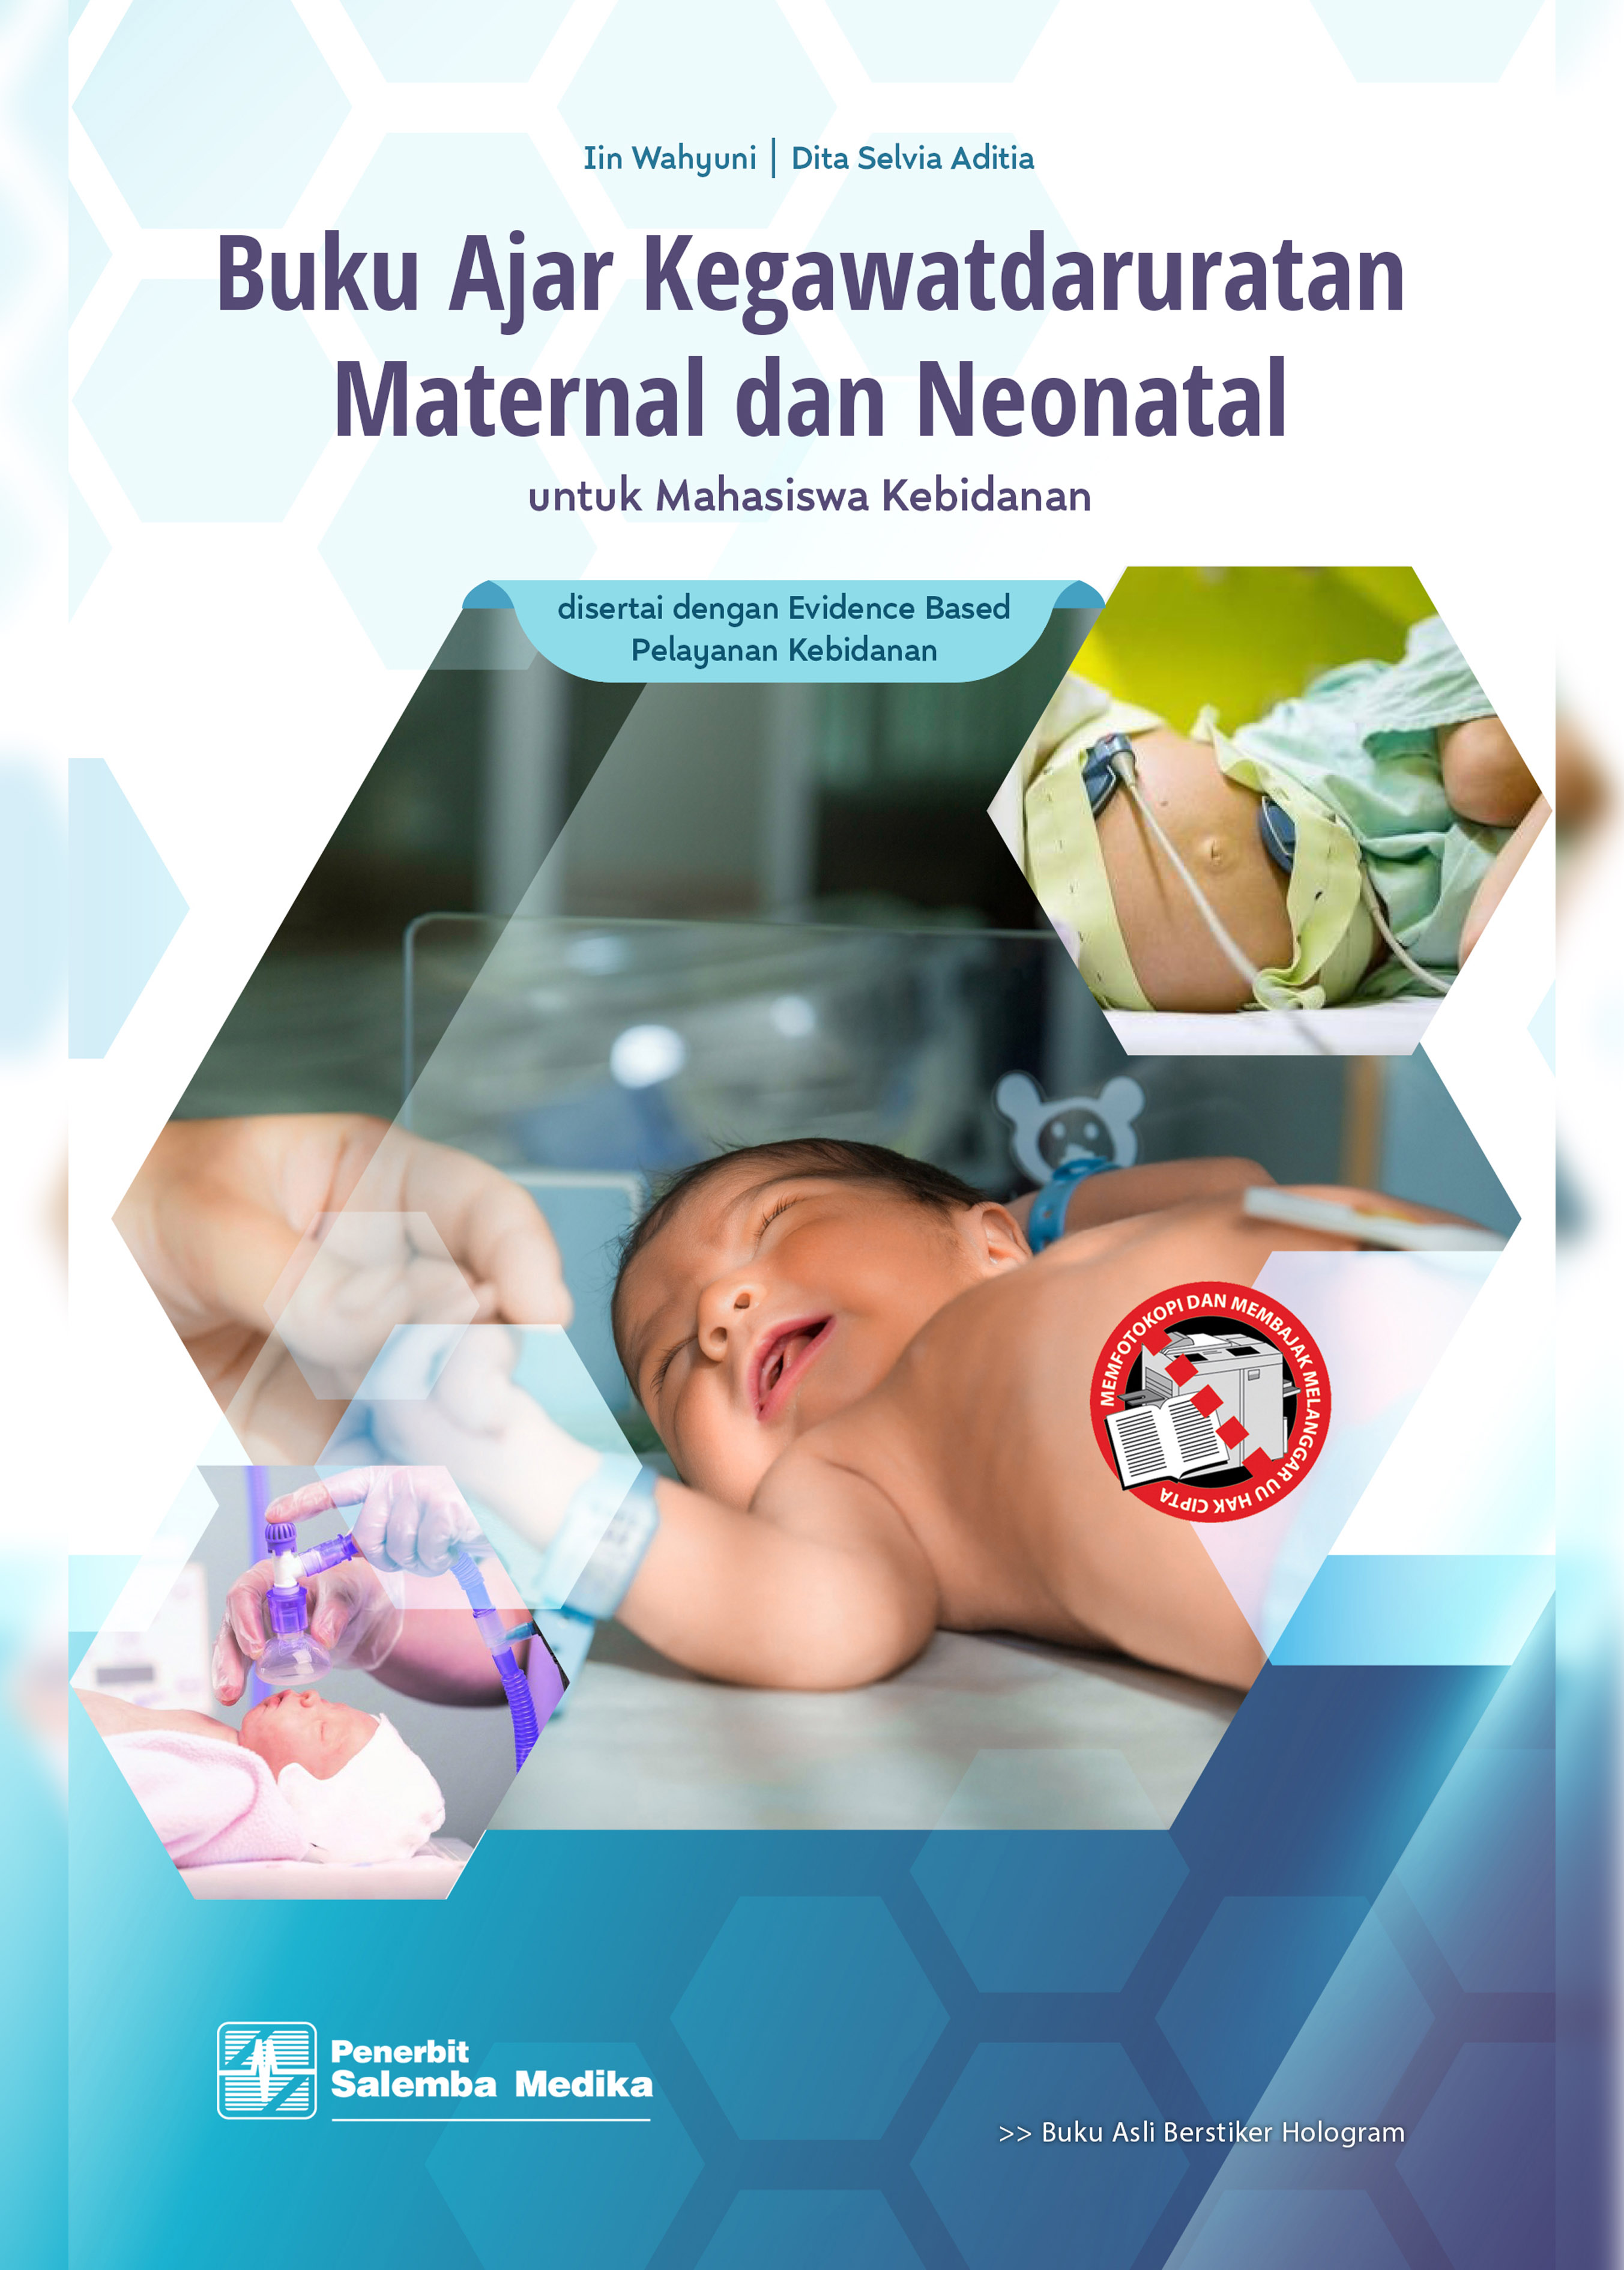 Buku ajar kegawatdaruratan maternal dan neonatal untuk mahasiswa kebidanan :  disertai dengan evidence based pelayanan kebidanan